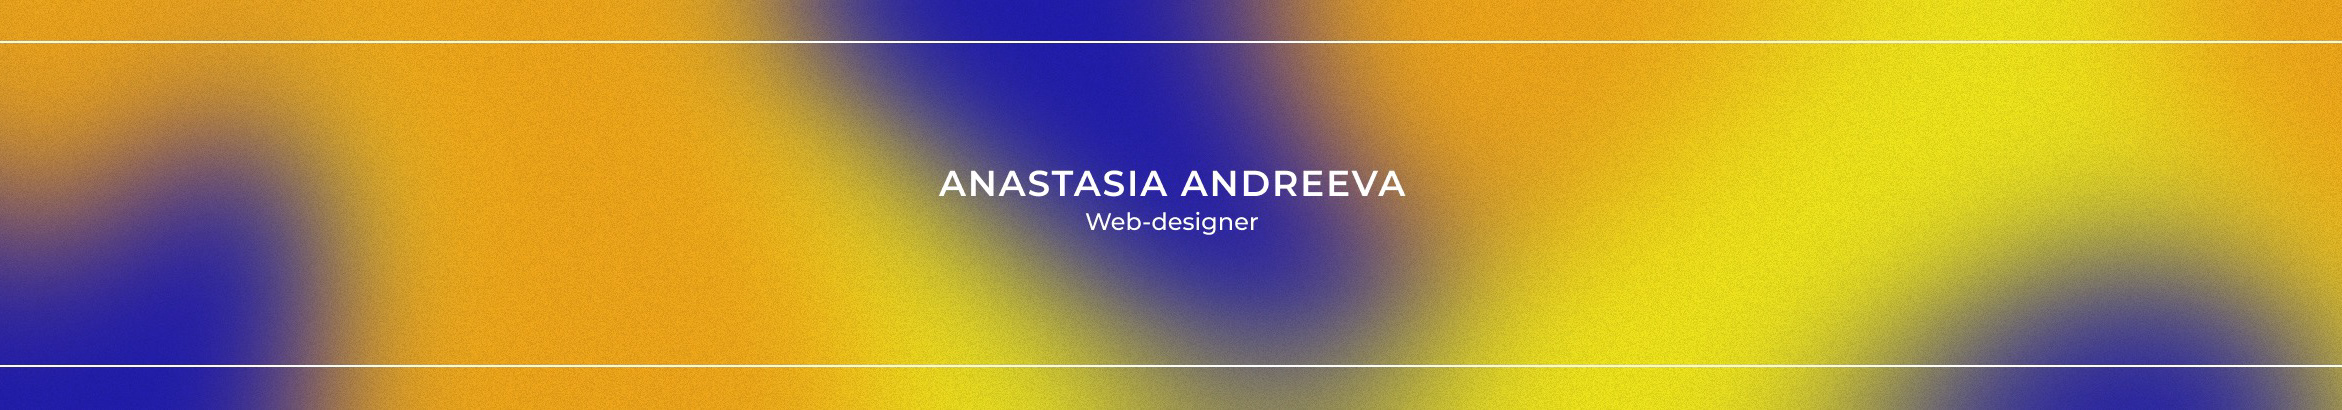 Banner profilu uživatele Anastasia Andreeva